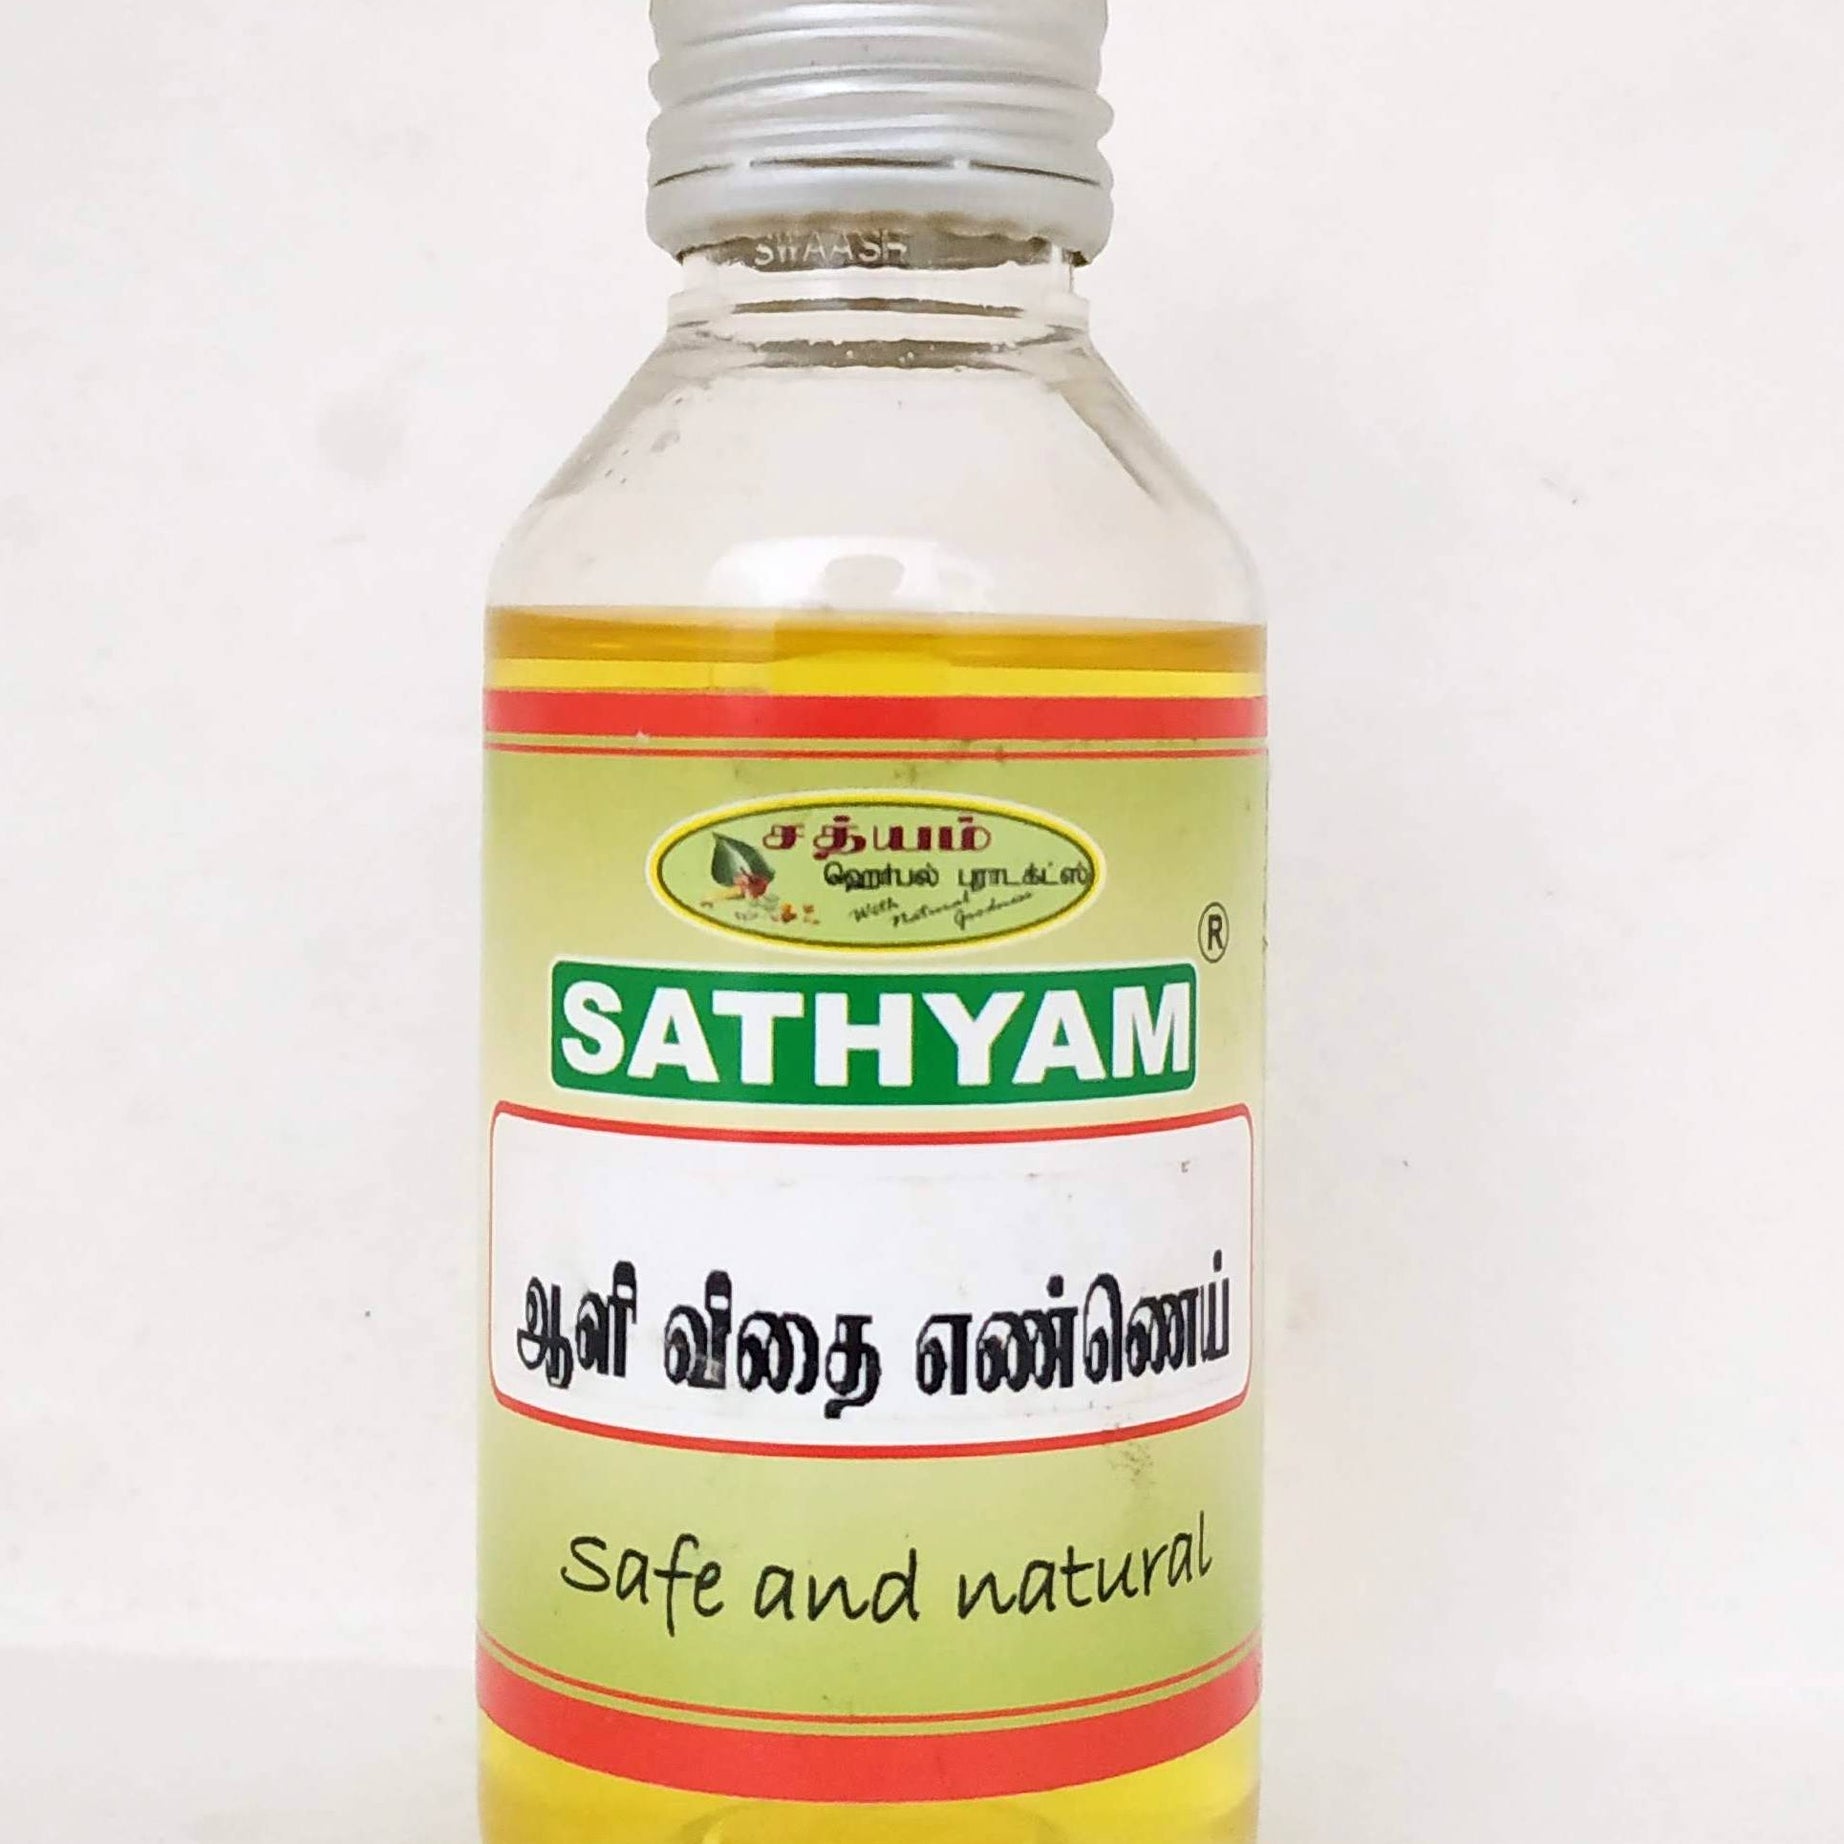 Shop Aali vithai ennai 100ml at price 48.00 from Sathyam Herbals Online - Ayush Care